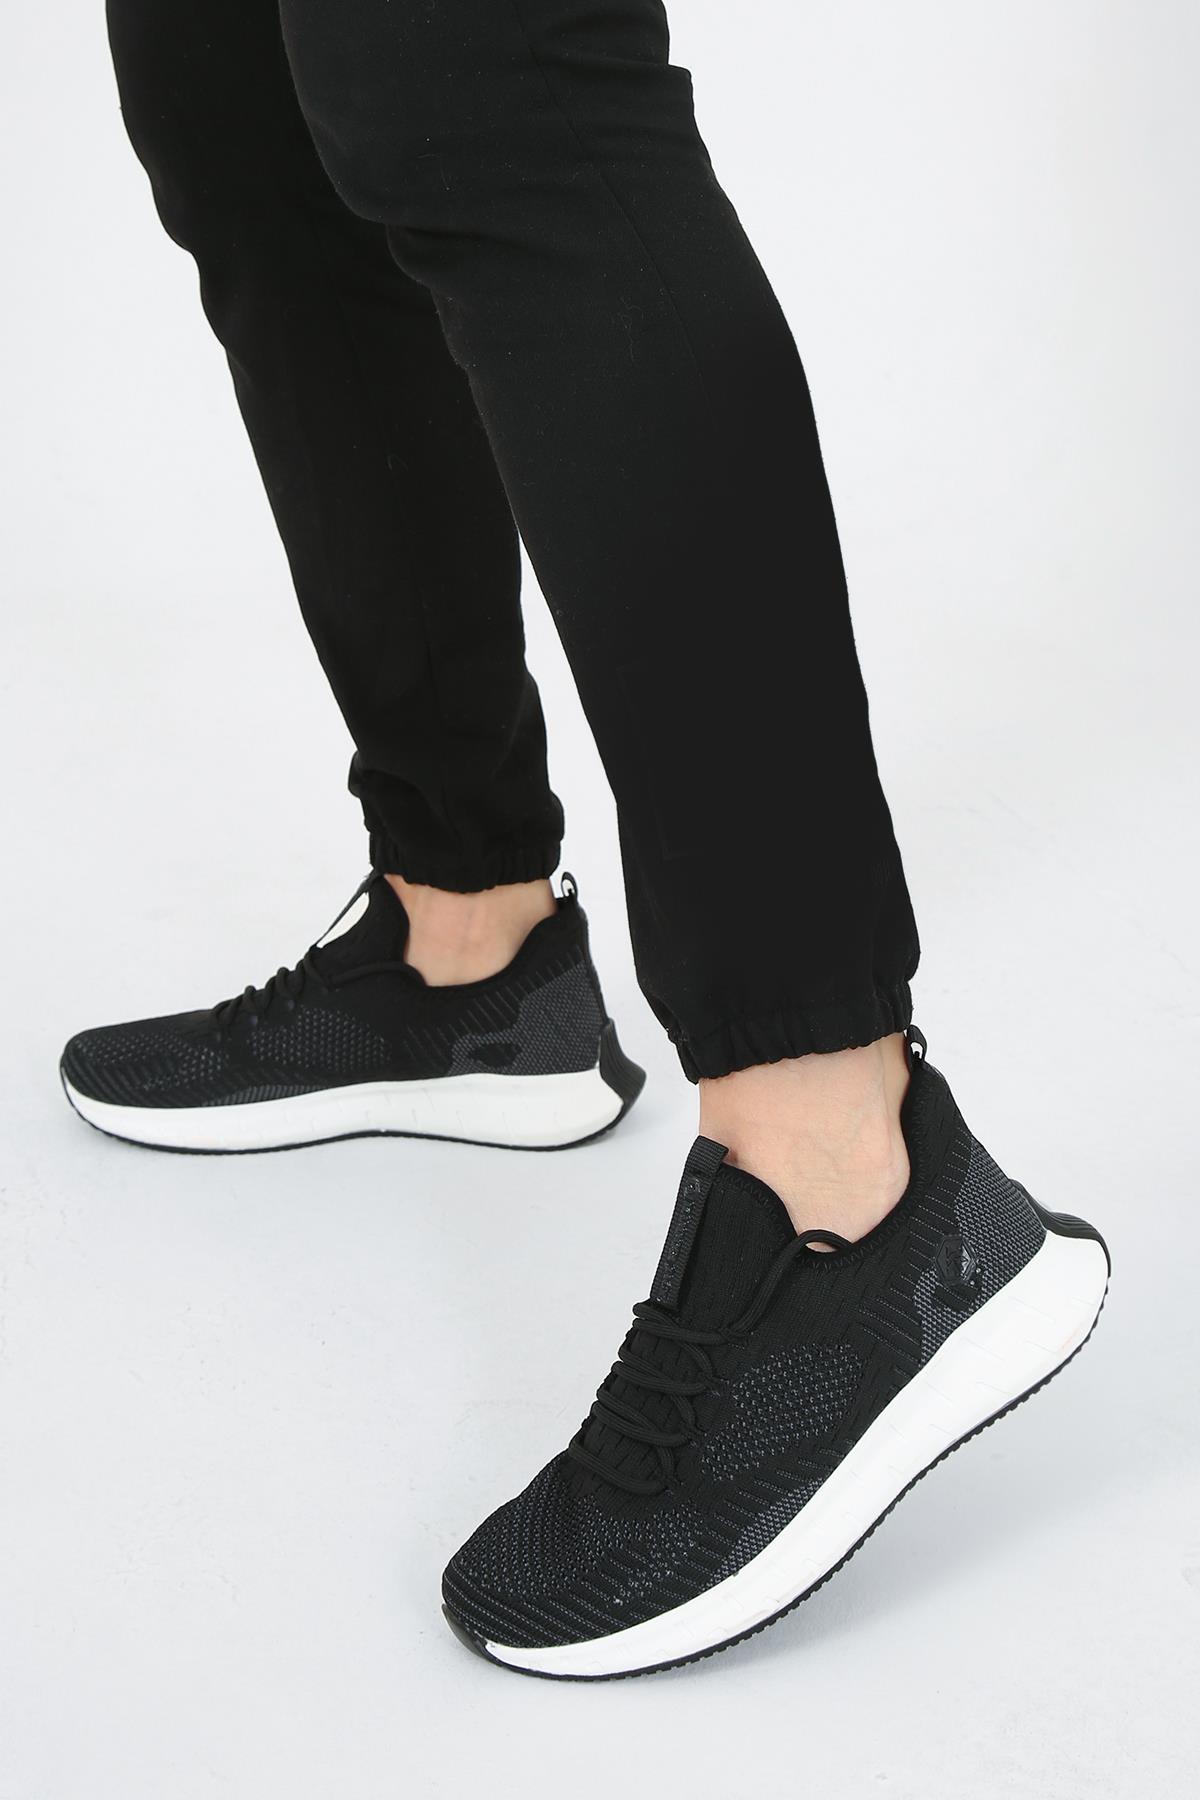 Cassidoshoes Siyah Çelik Örme Rahat Taban Erkek Spor Ayakkabı I Cassido  Shoes